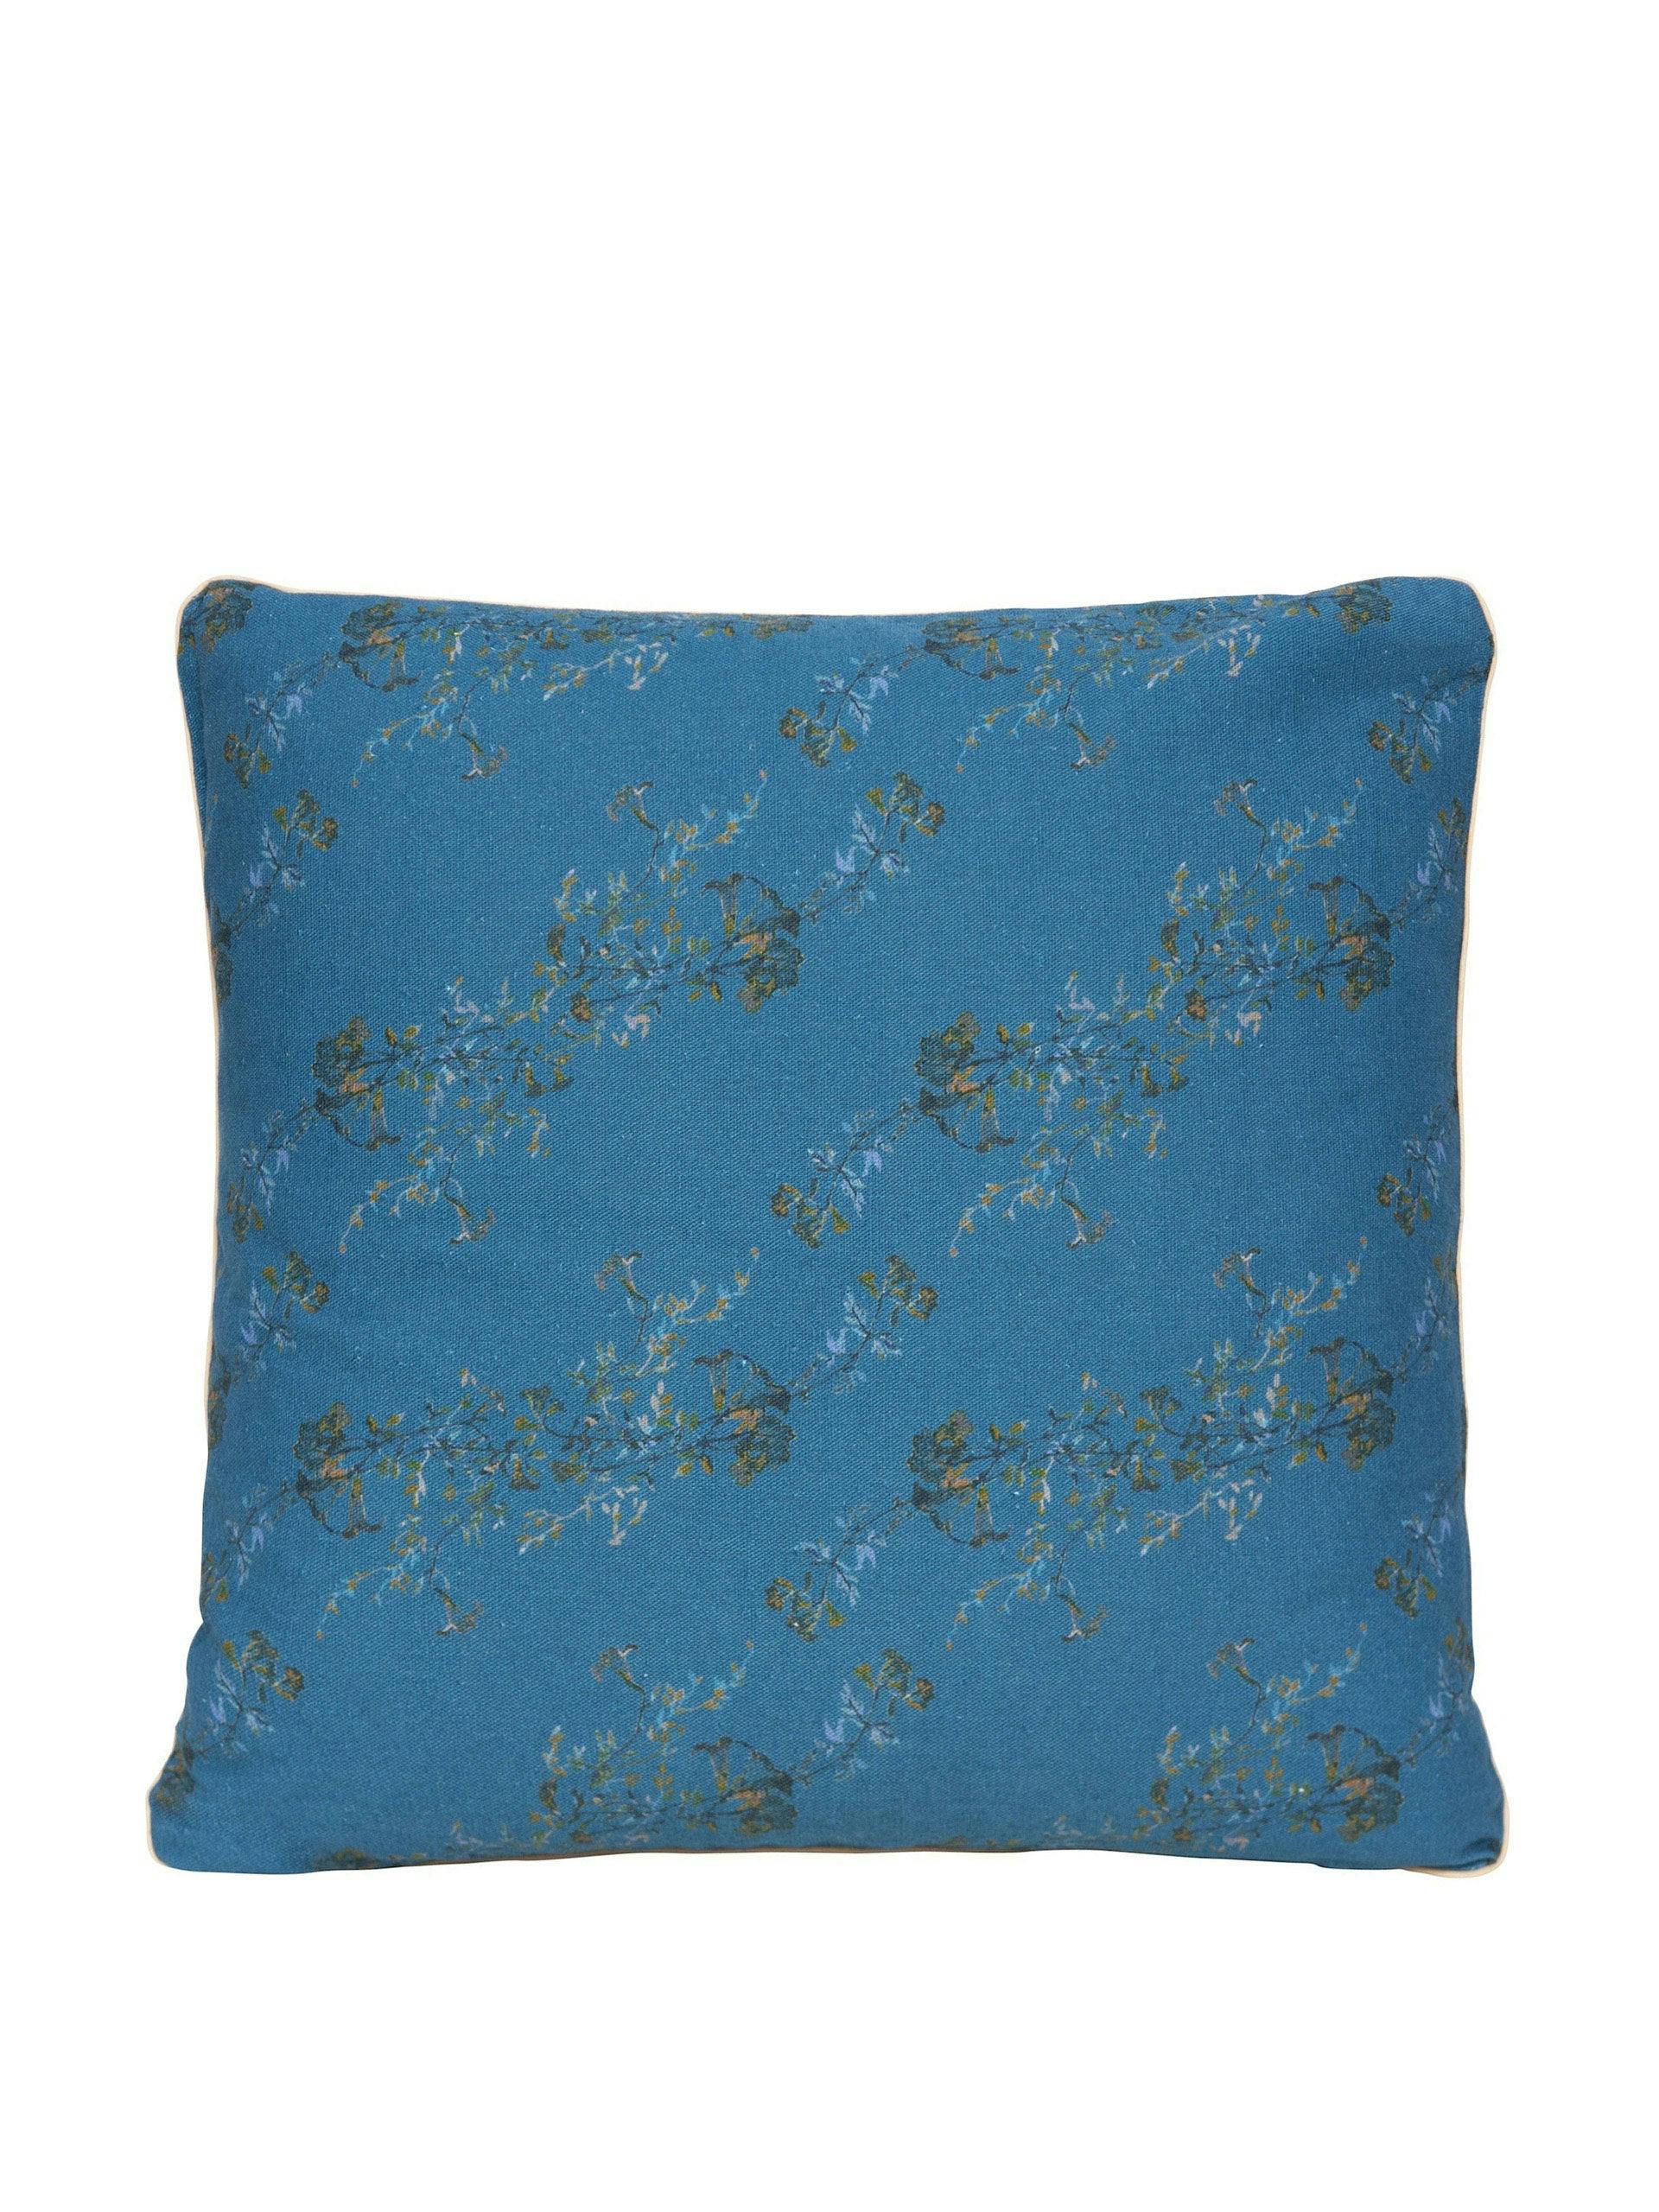 Blue floral print linen cushion